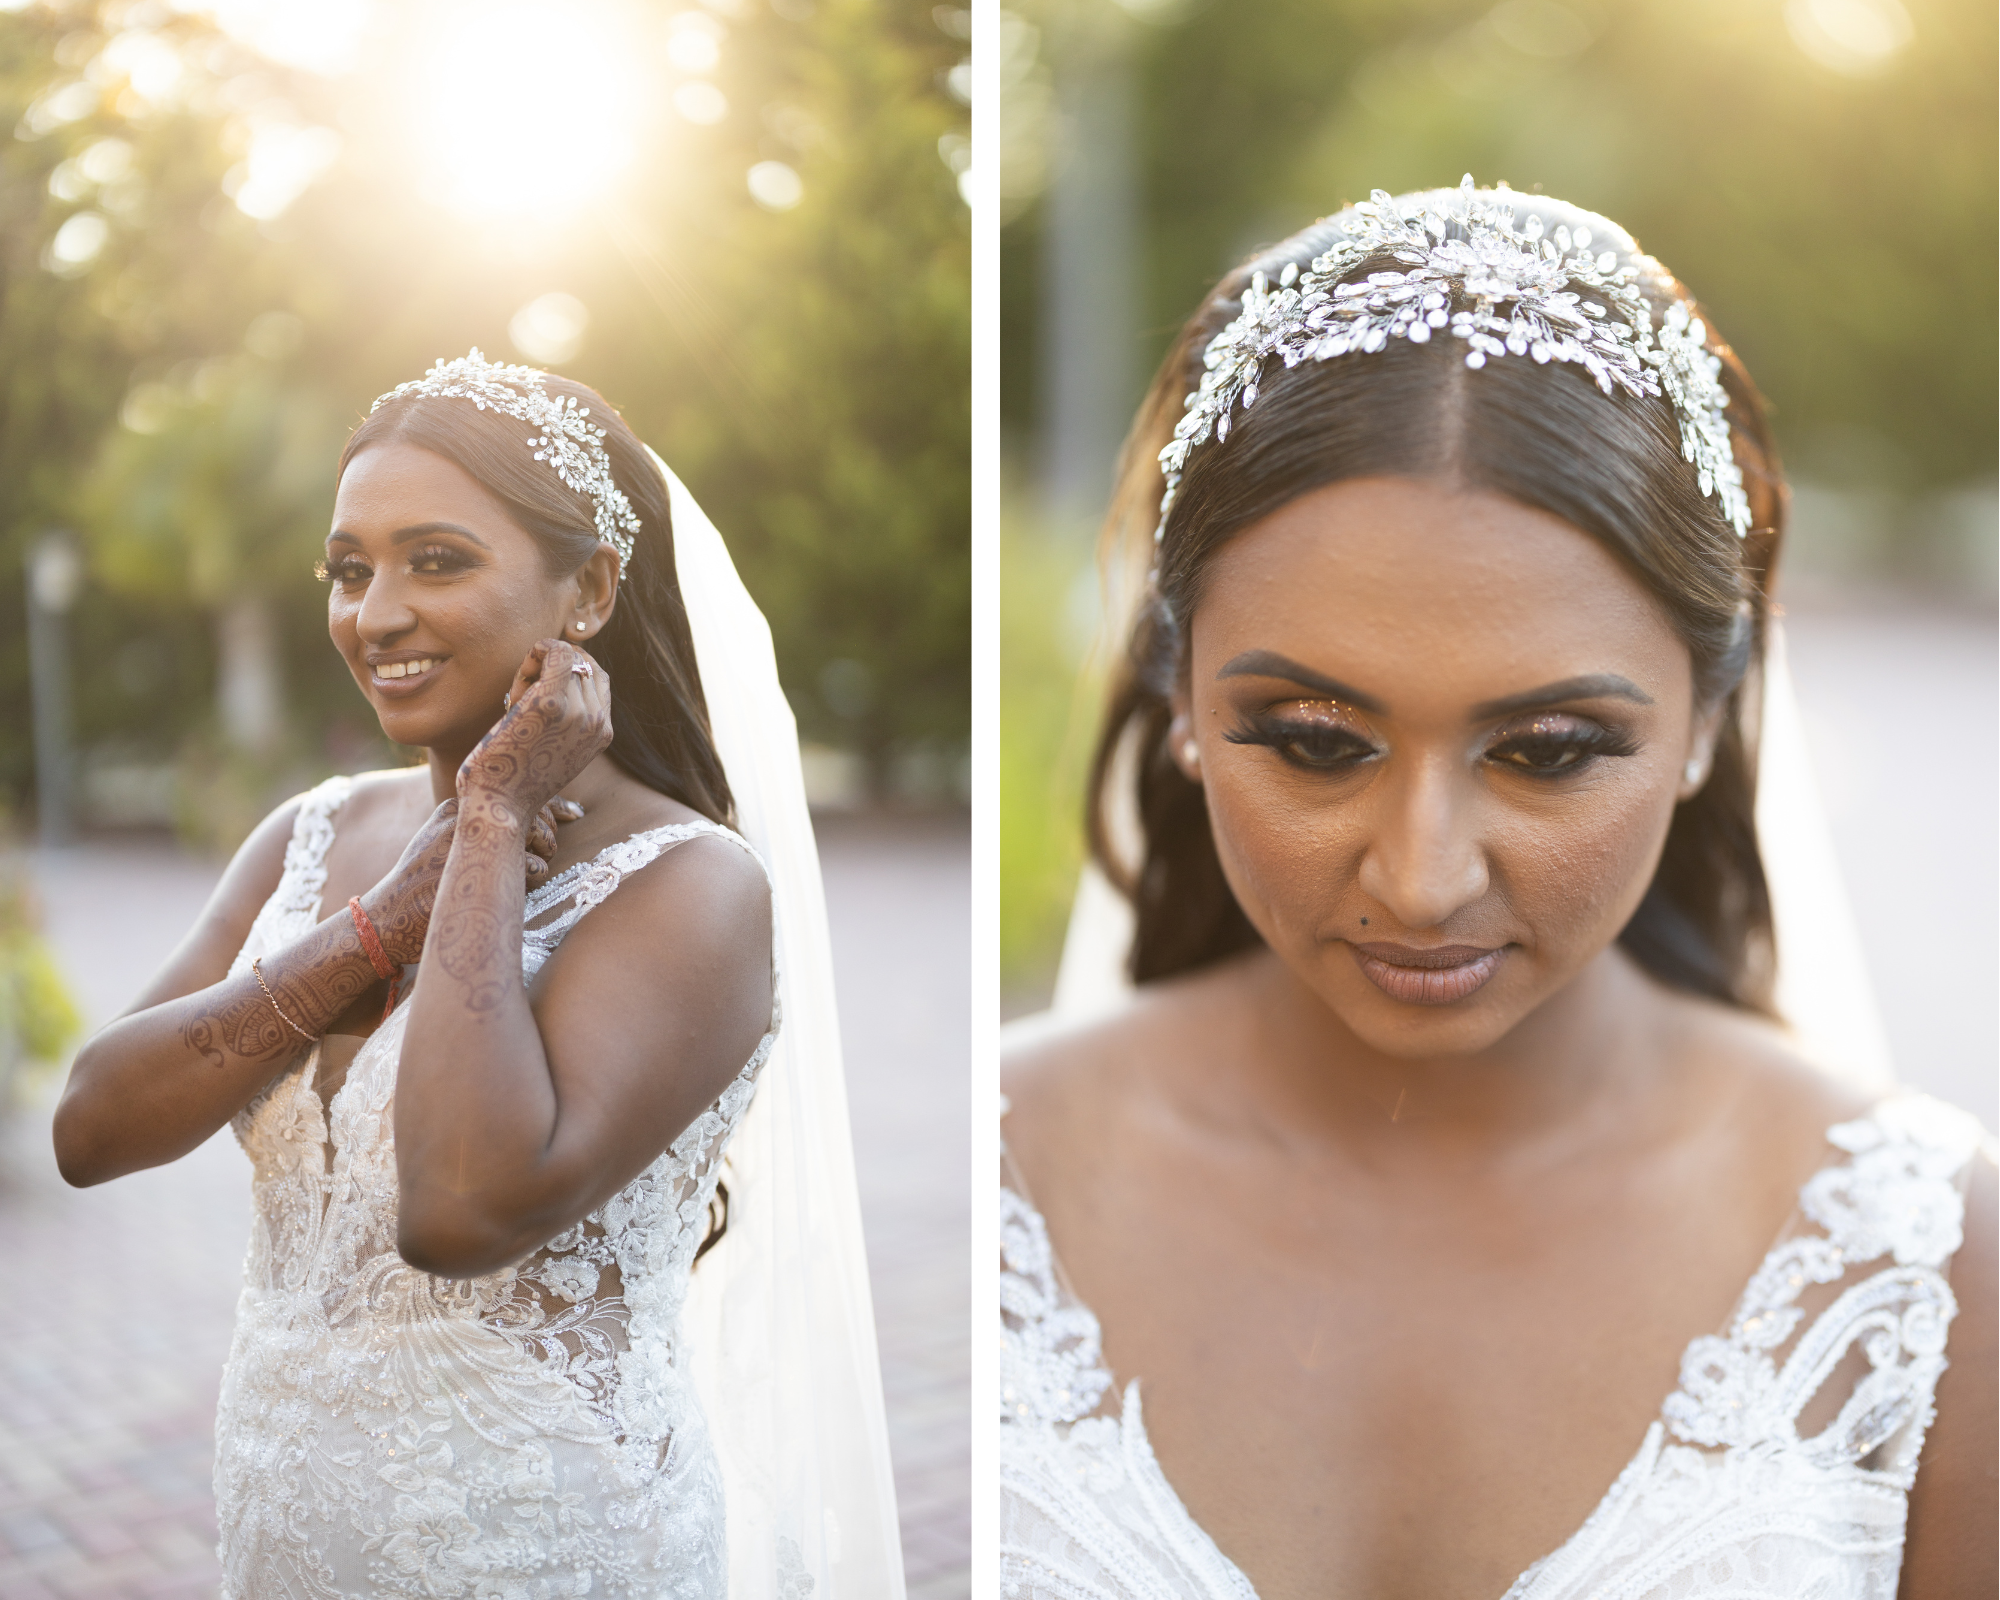 Stunning bride Avita's henna wedding tattoos! She's wearing her lace wedding gown, veil,  and Swarovski crystal headband.